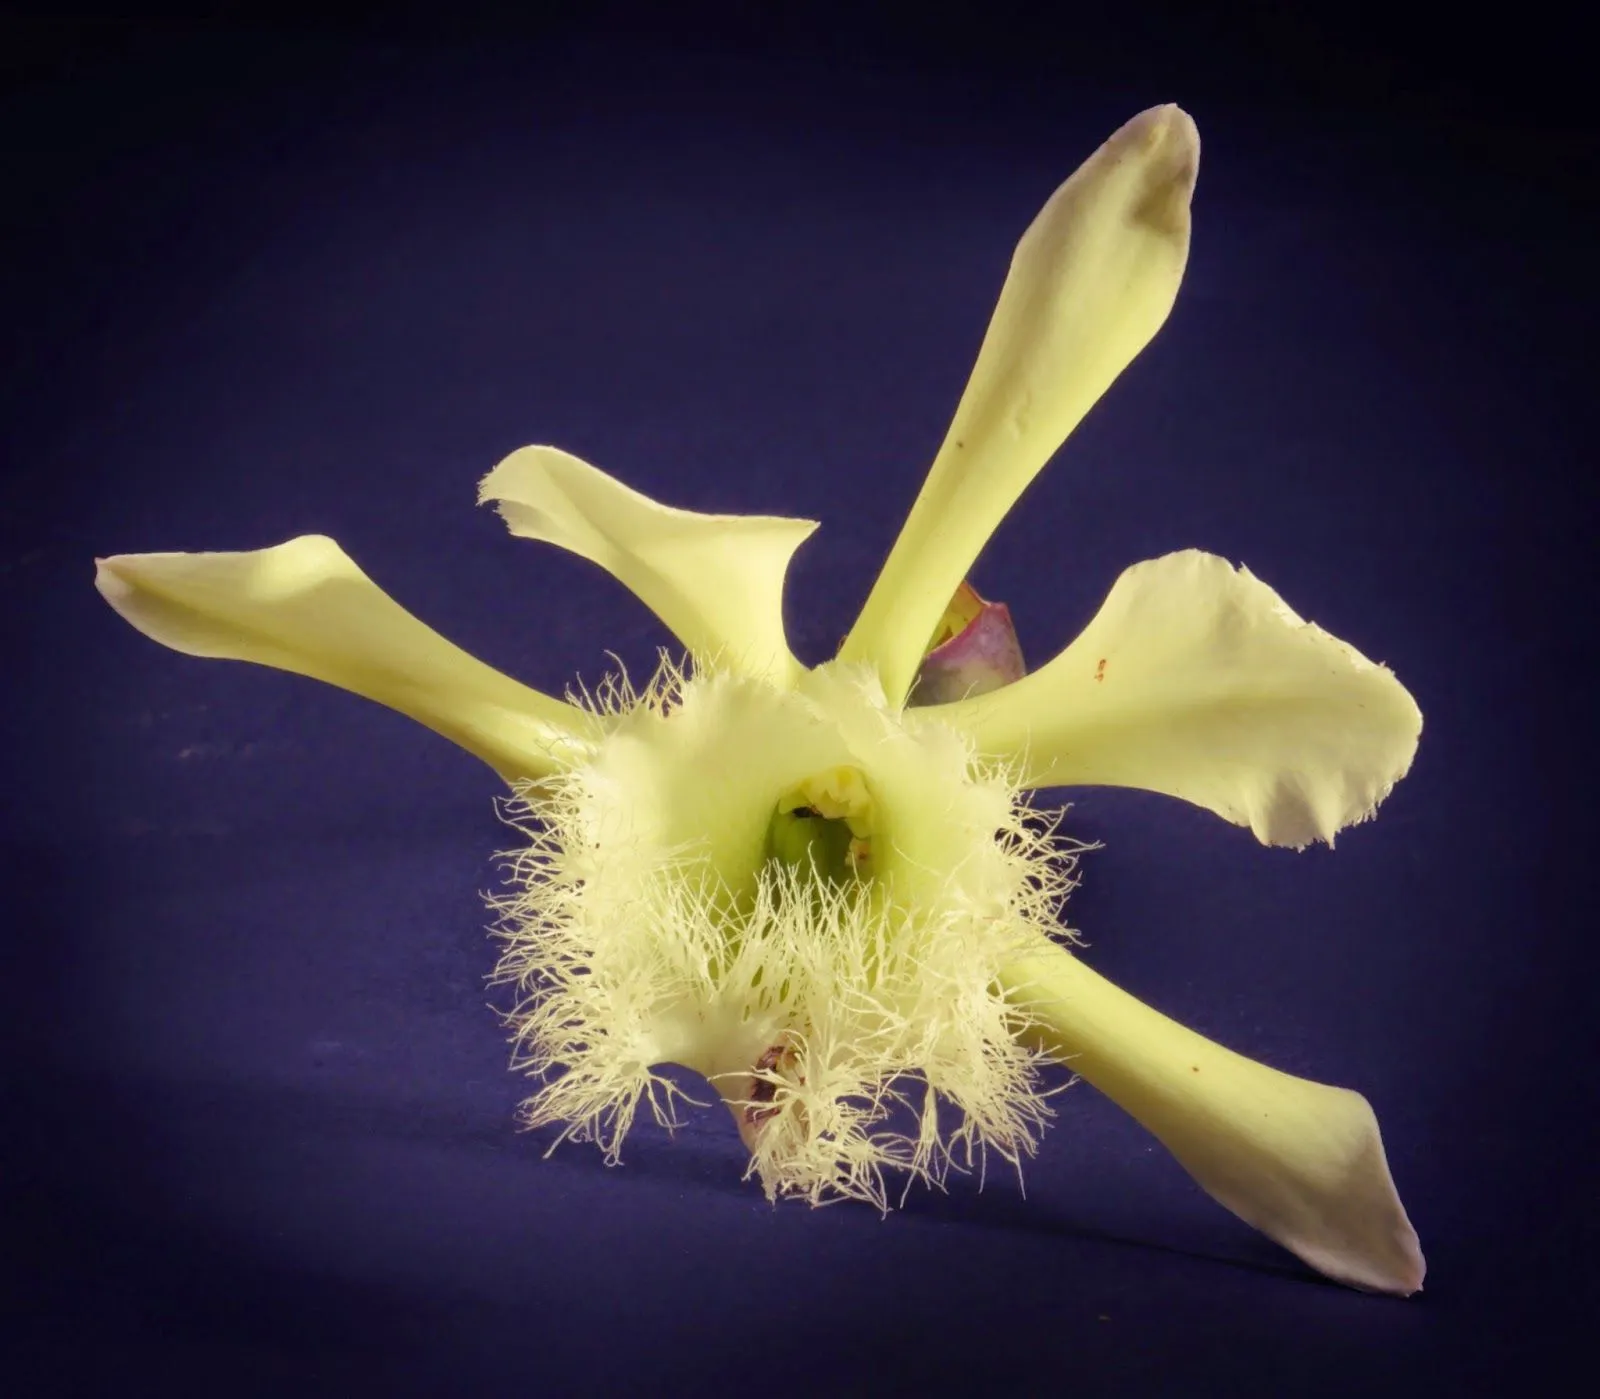 Pensamientos Maupinianos: Rhyncholaelia digbyana flor nacional de Honduras  (antes Brasavola Digbyana)